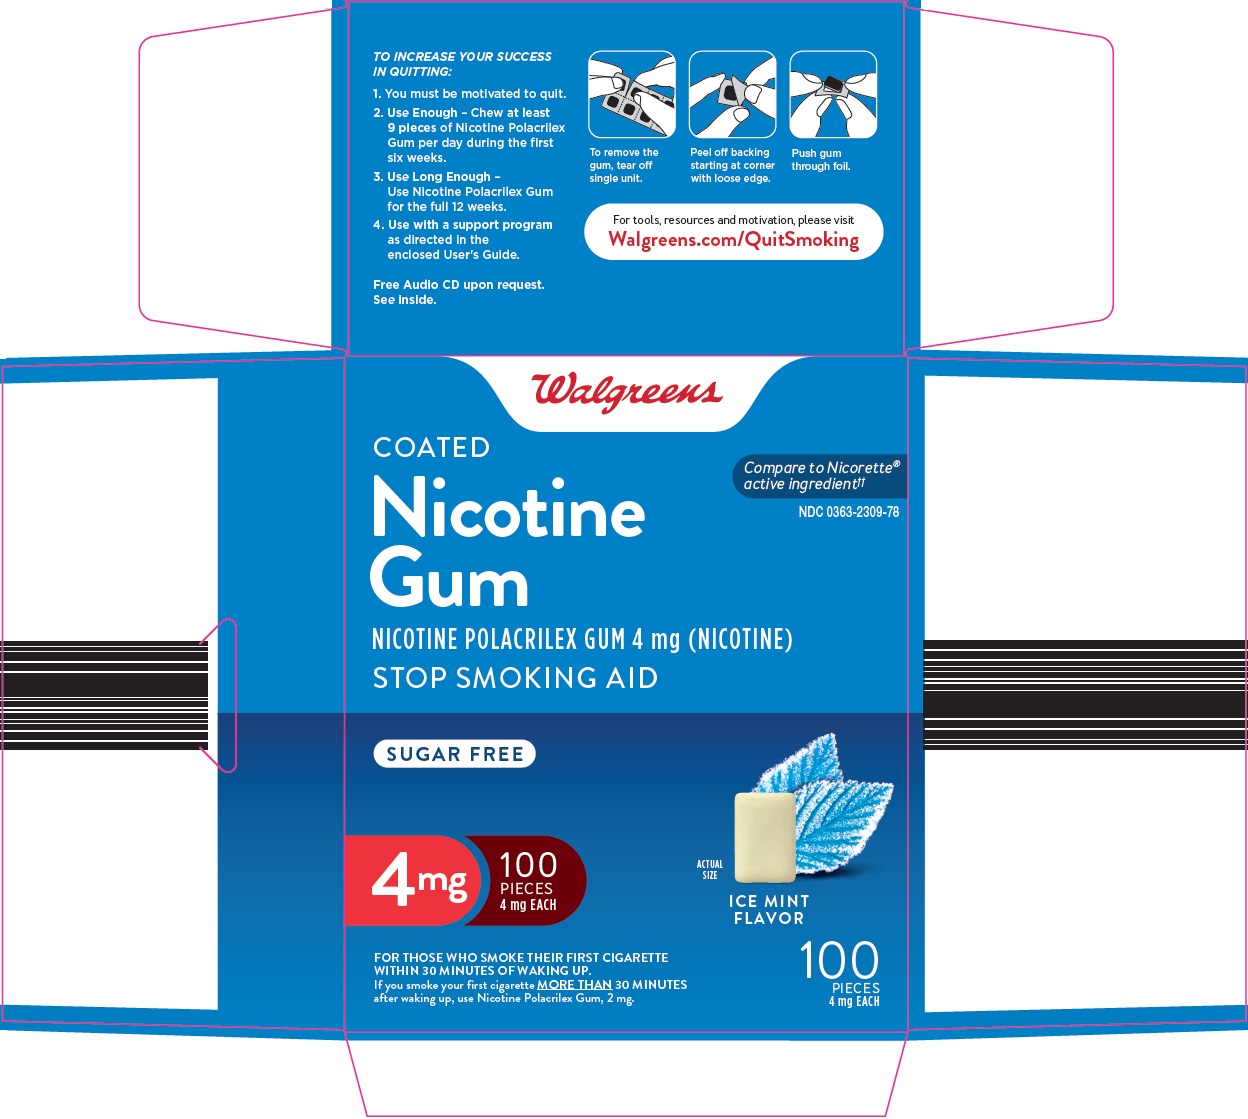 309-94-nicotine-gum-1.jpg